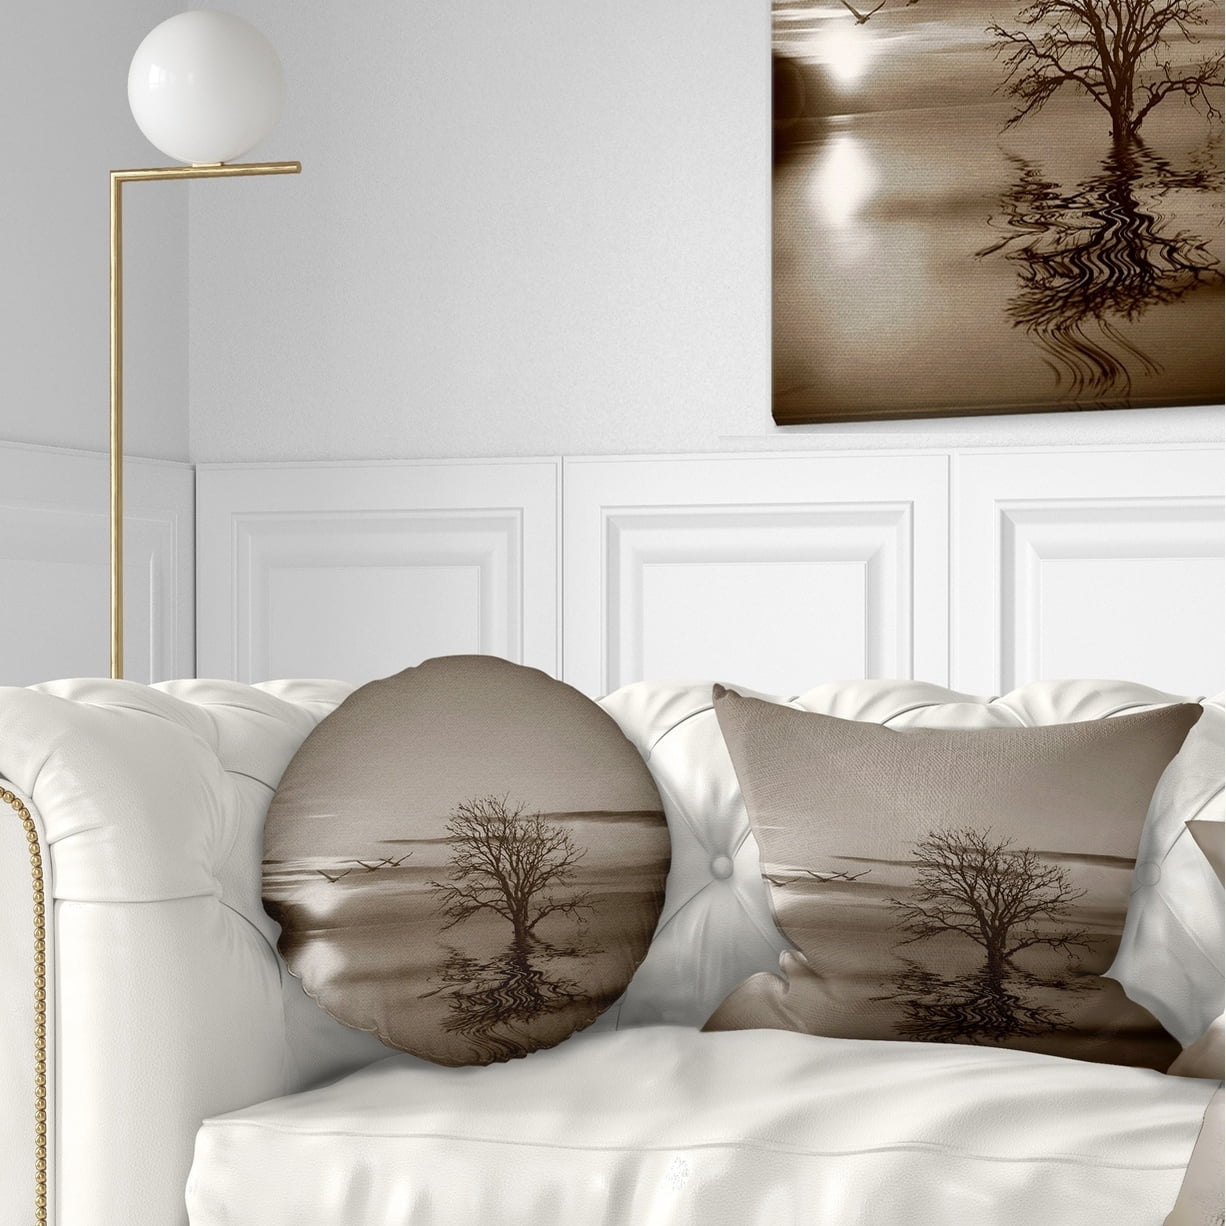 DesignArt CU6006-20-20-C Flowering Trees Over River Landscape Printed Throw Pillow 20